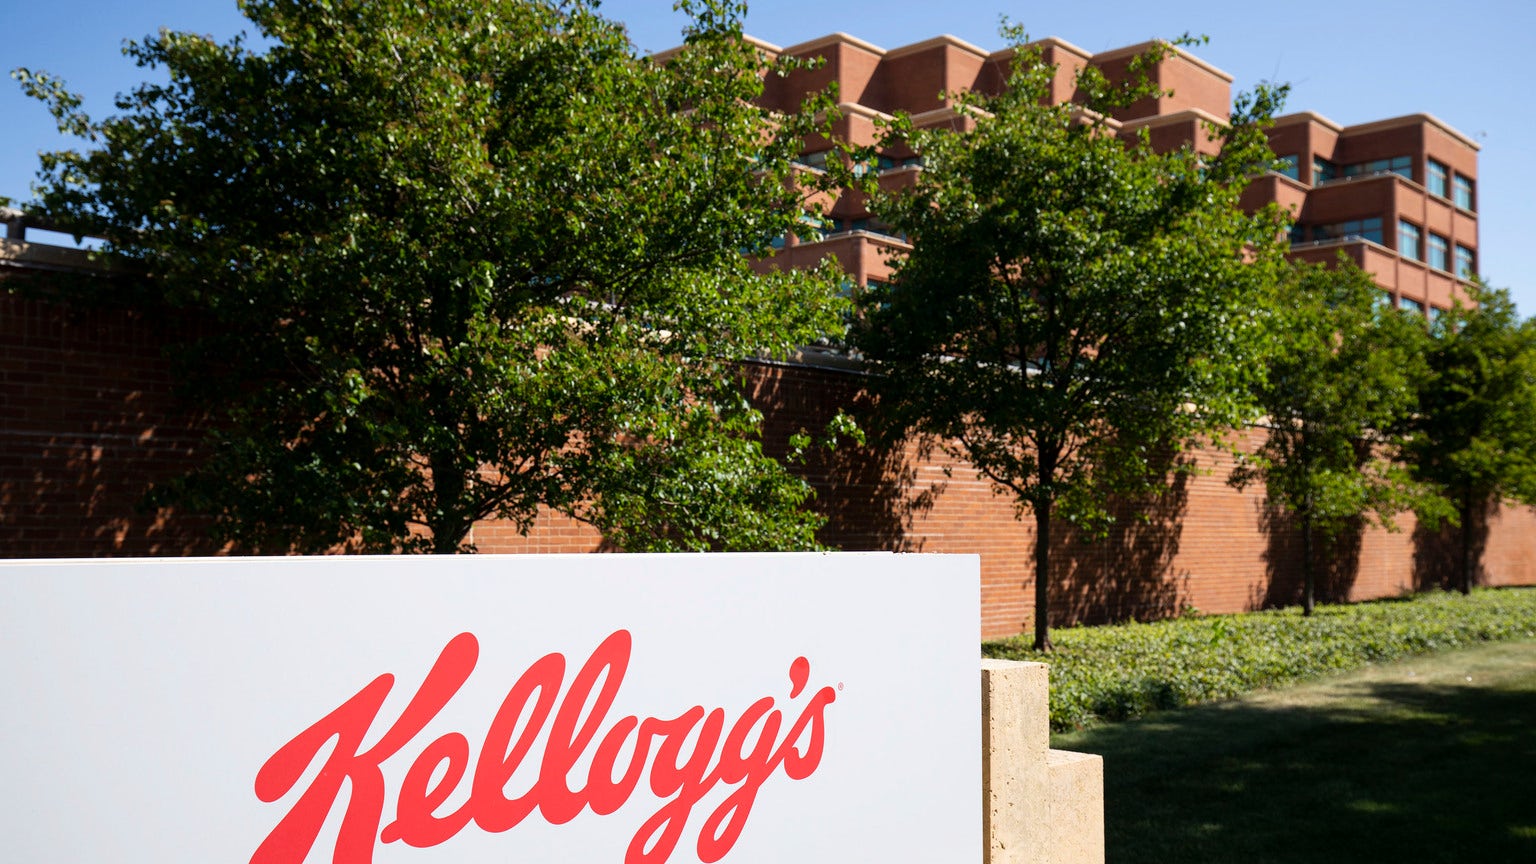 Kellogg's split: A common business strategy?